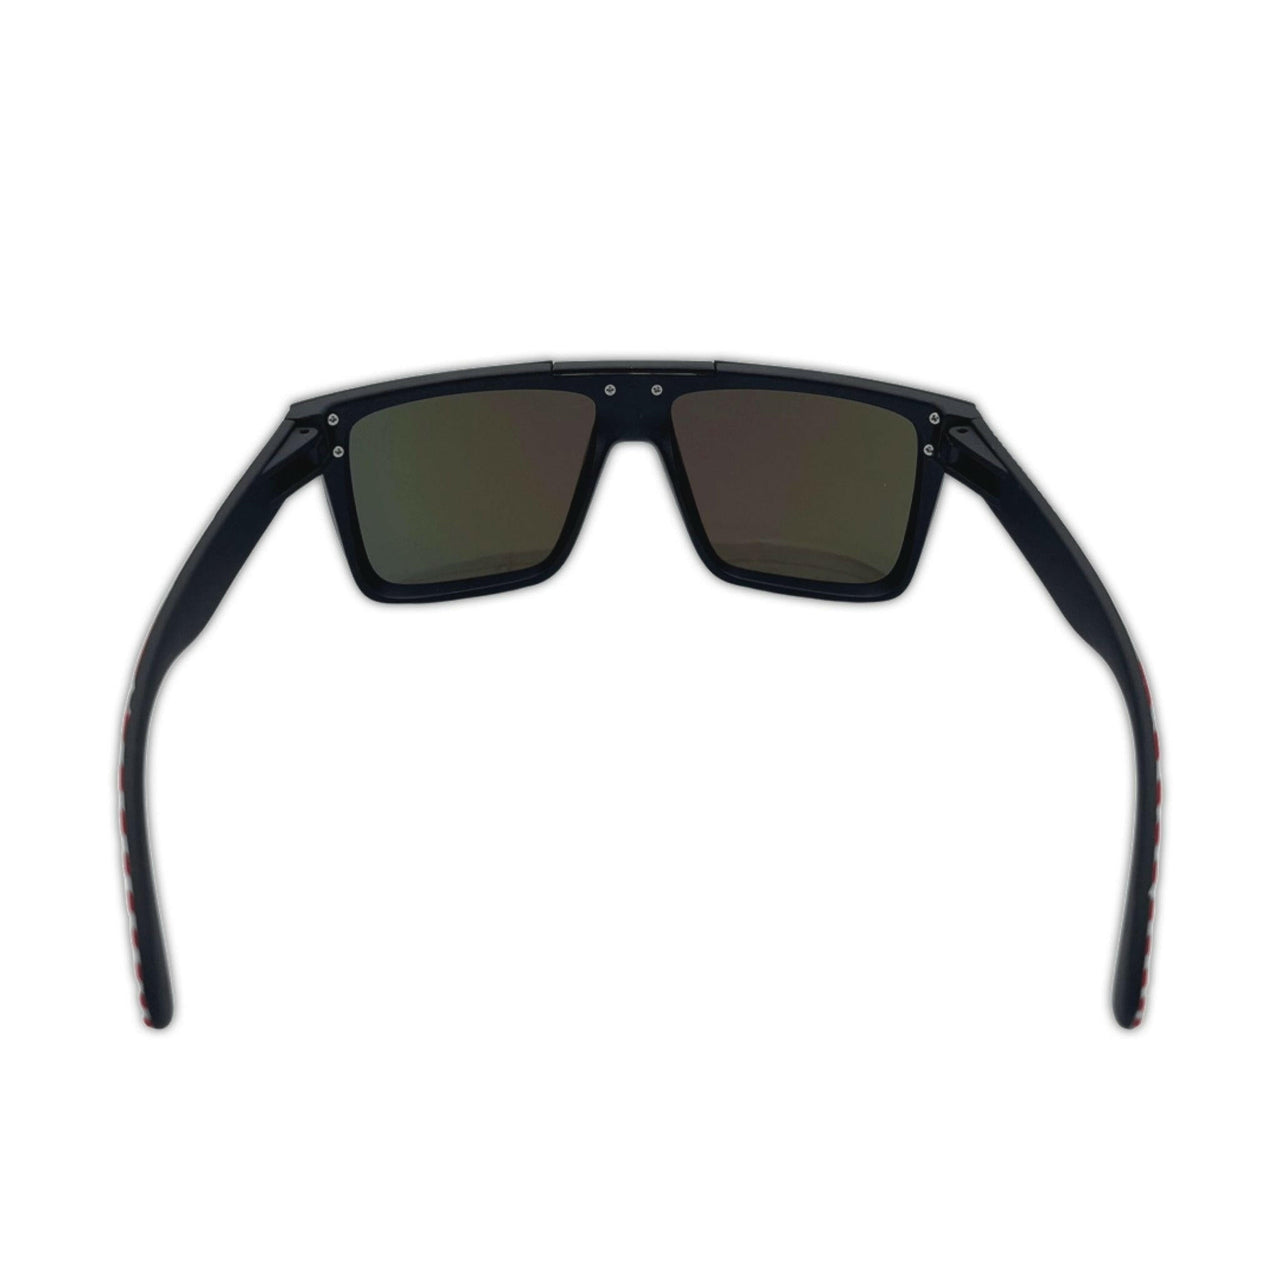 Flair USA Blue Polarized Lens Sunglasses